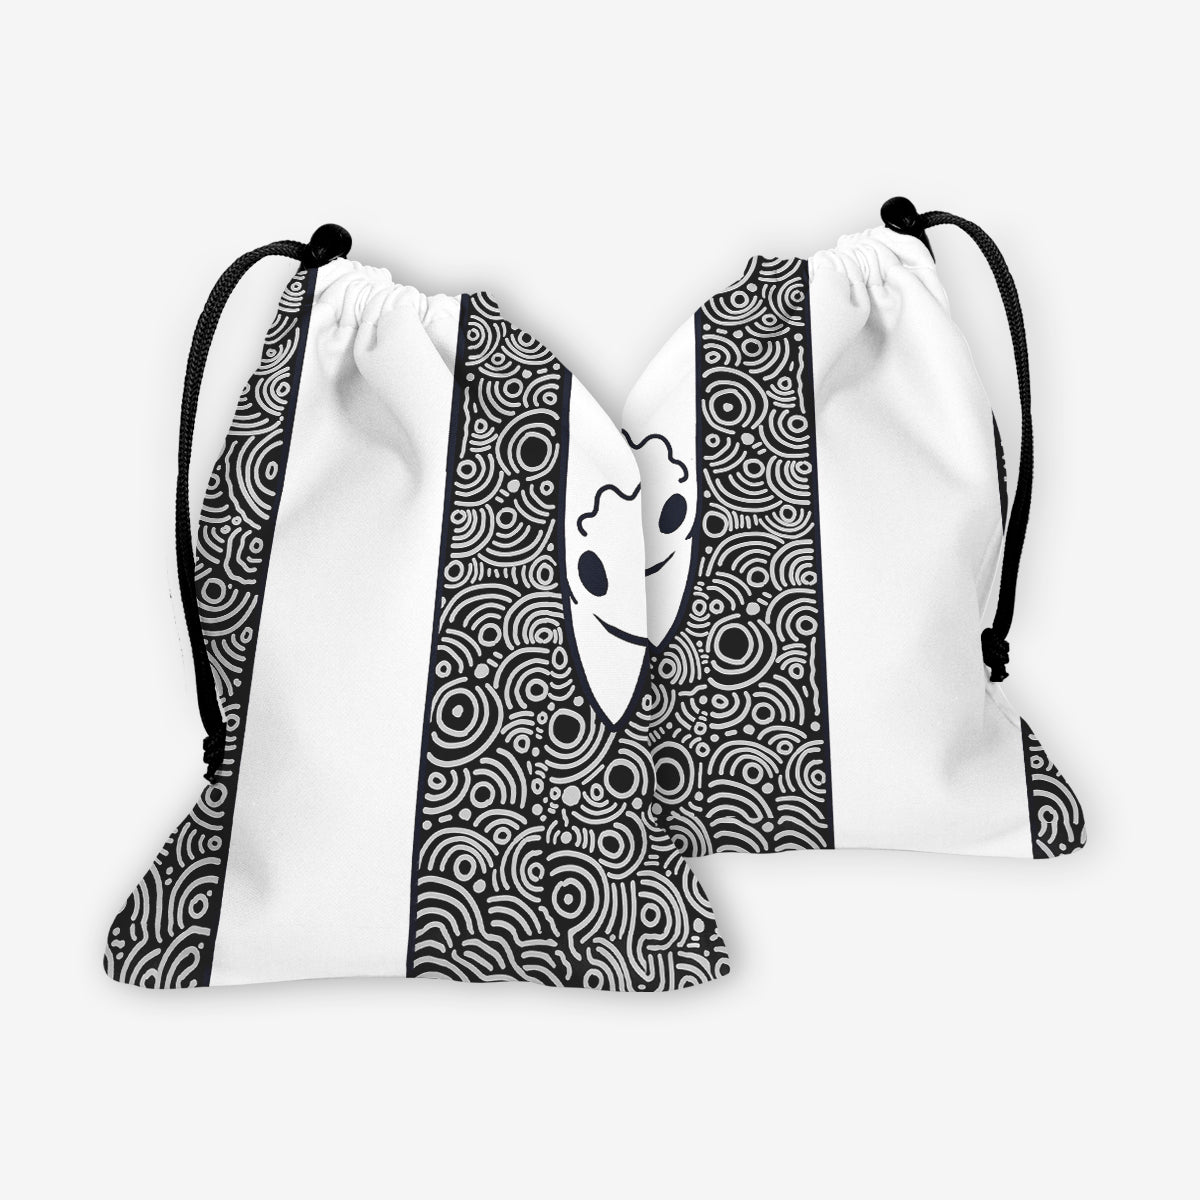 Black & White Dice Bags